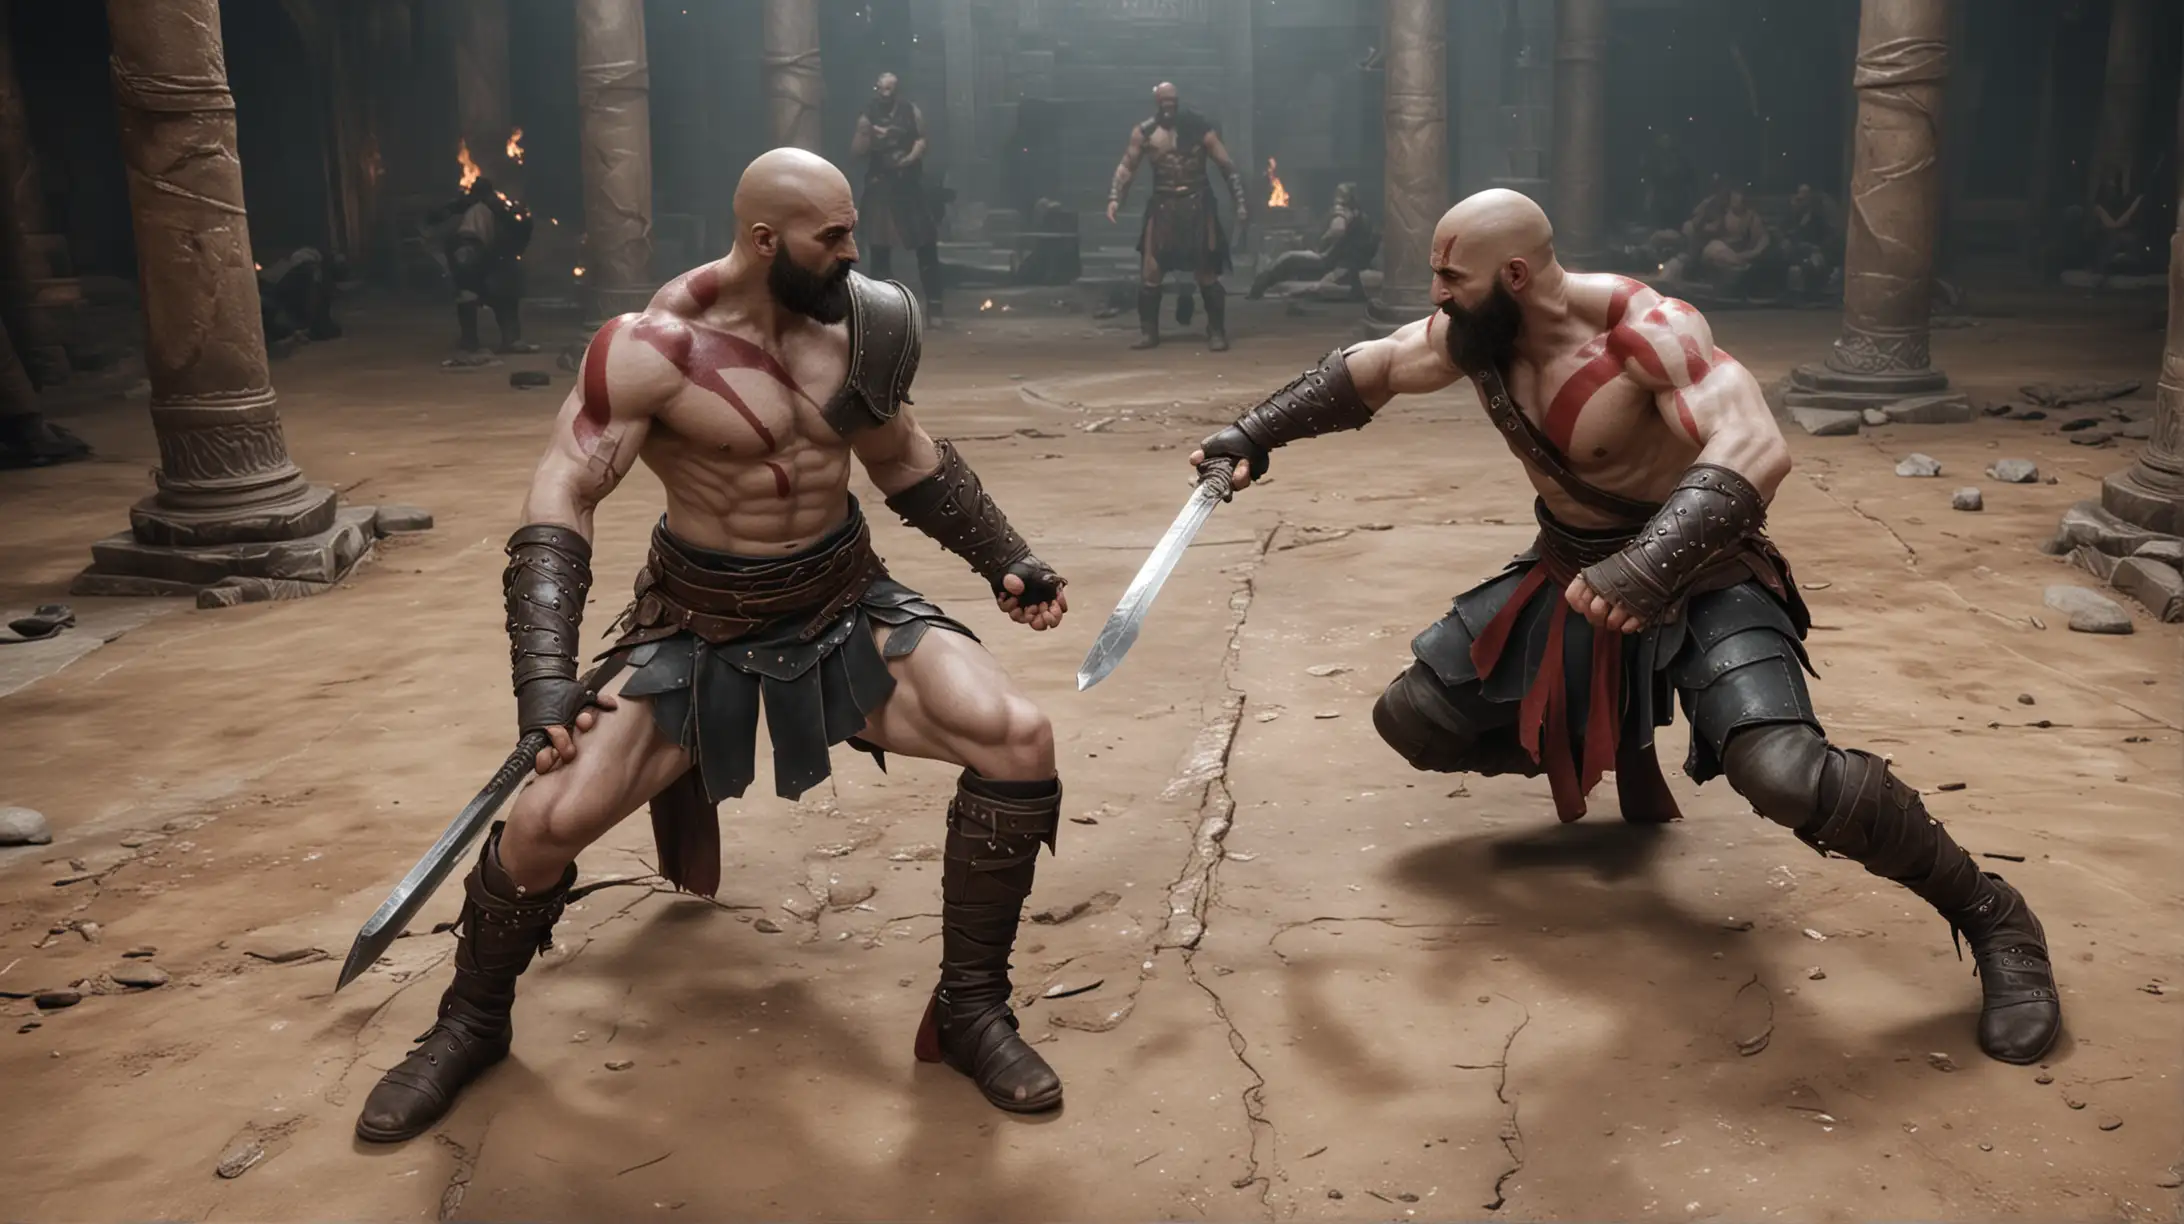 Kratos Battles Gladiators with Mistress and Handsome Slave in Black Skirt